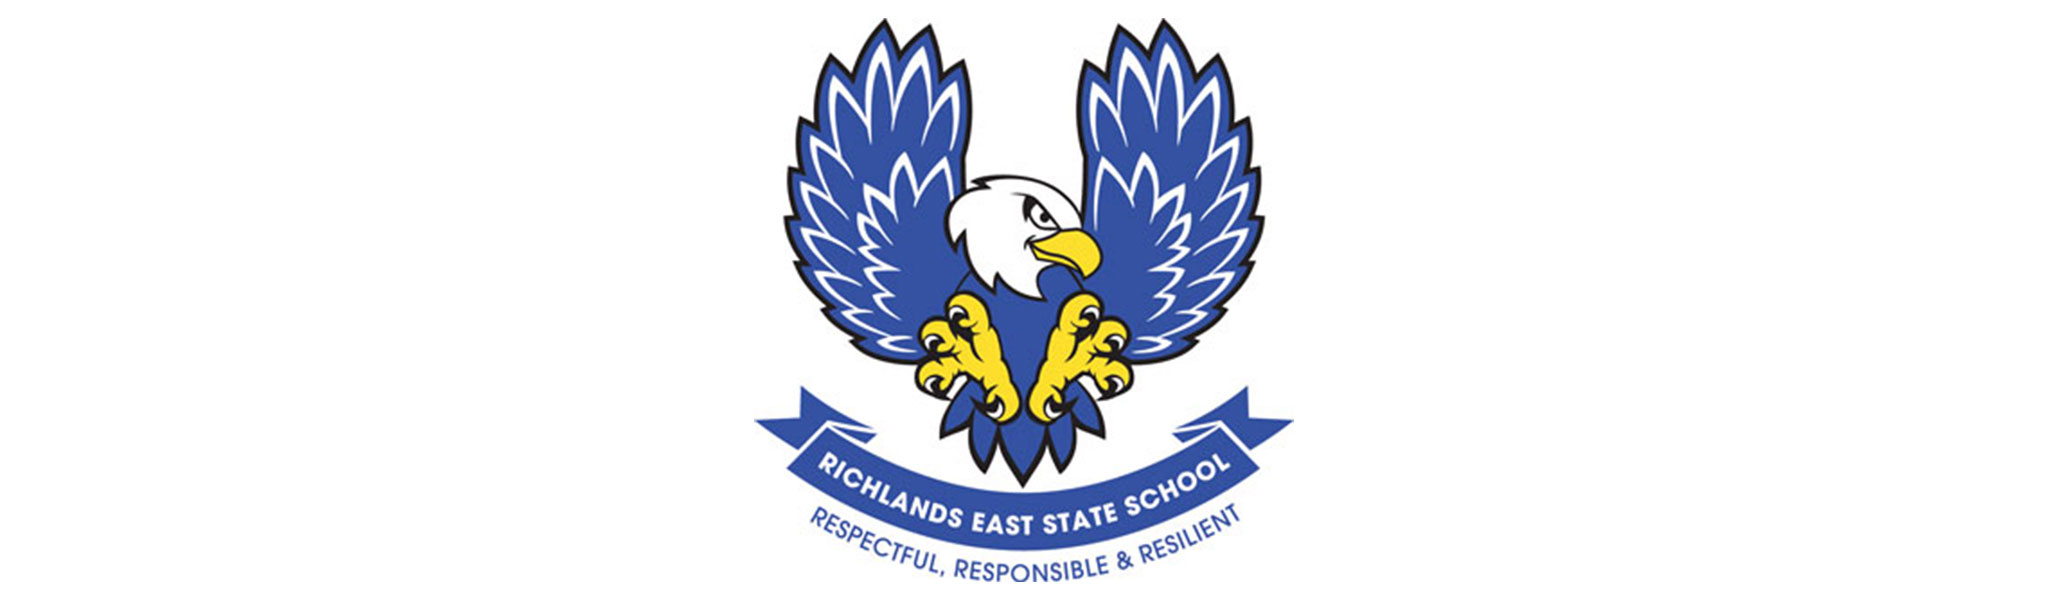 Richlands East State School logo